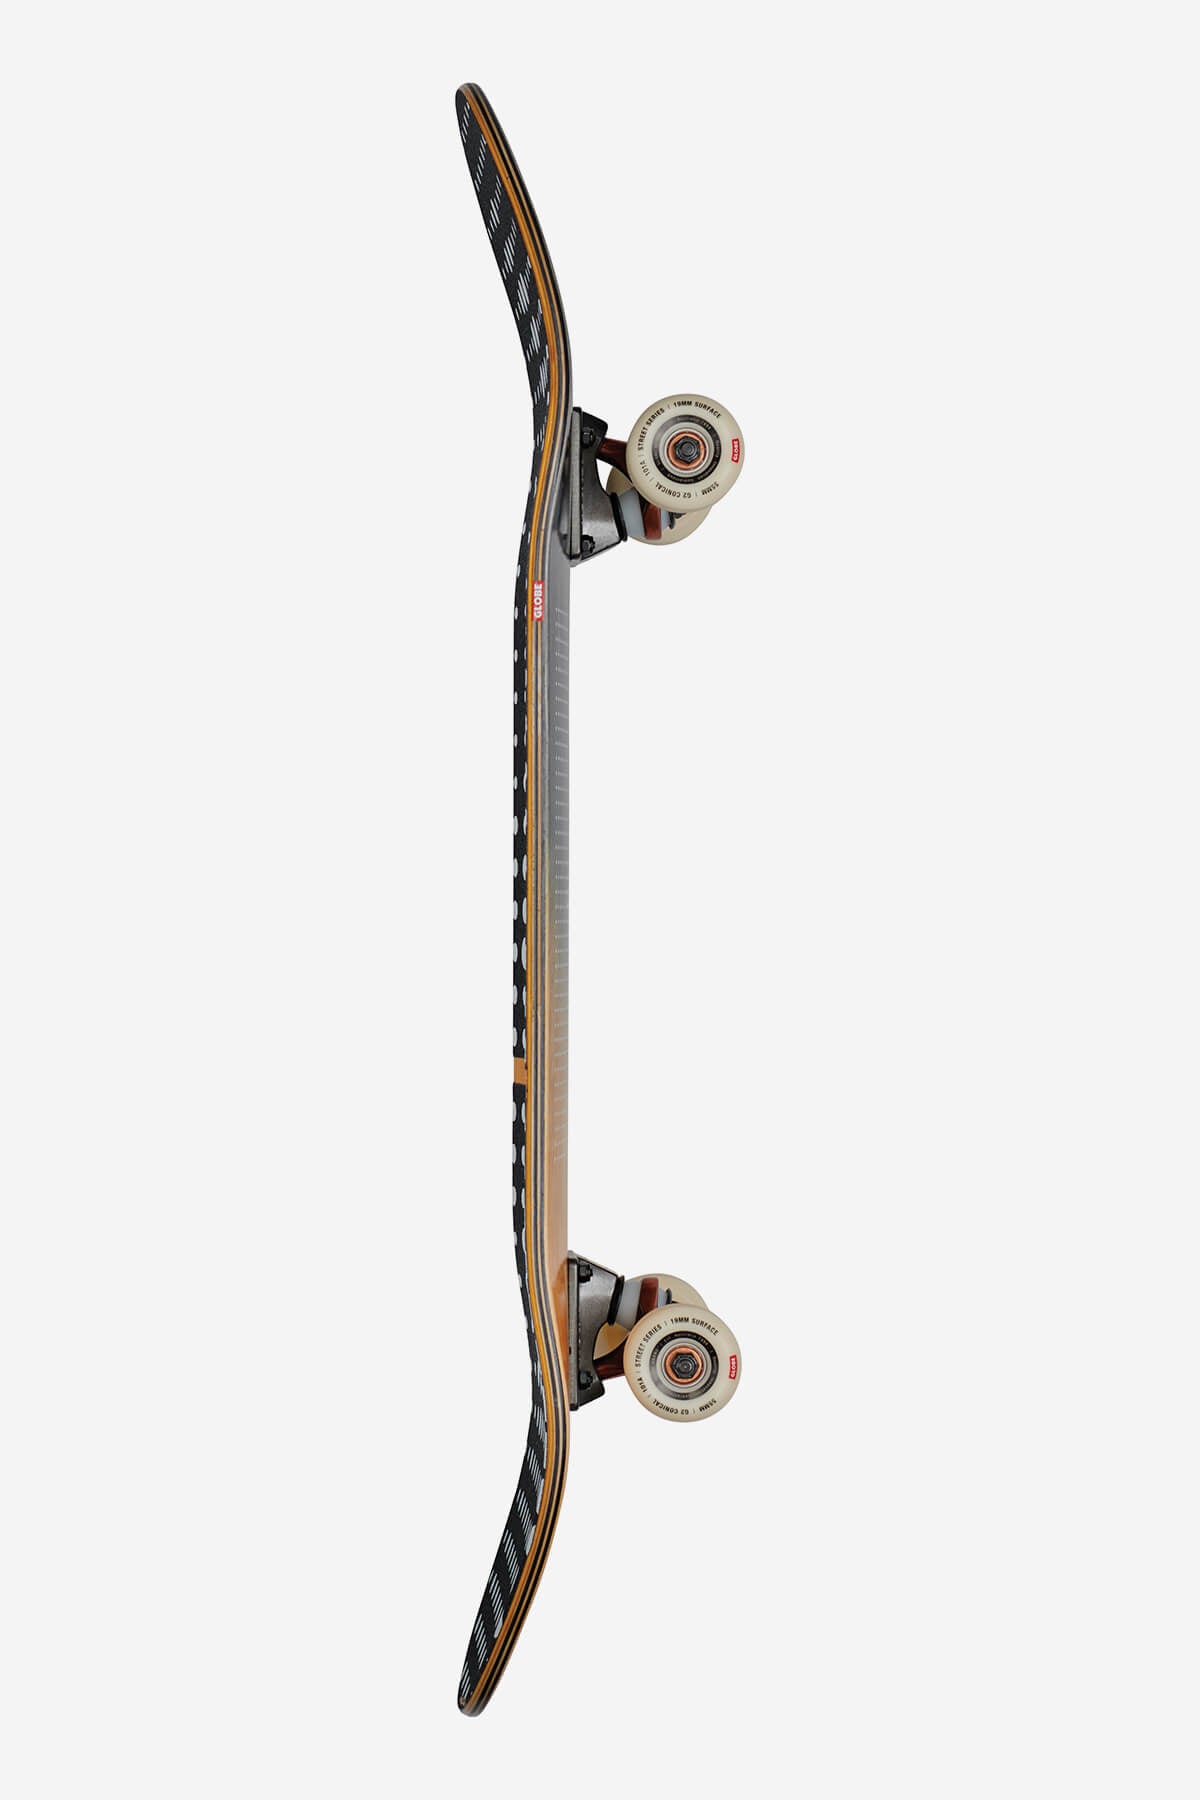 Globe Skateboard completa G2 Dot Gain - 8,5" Completa Skateboard in Peace